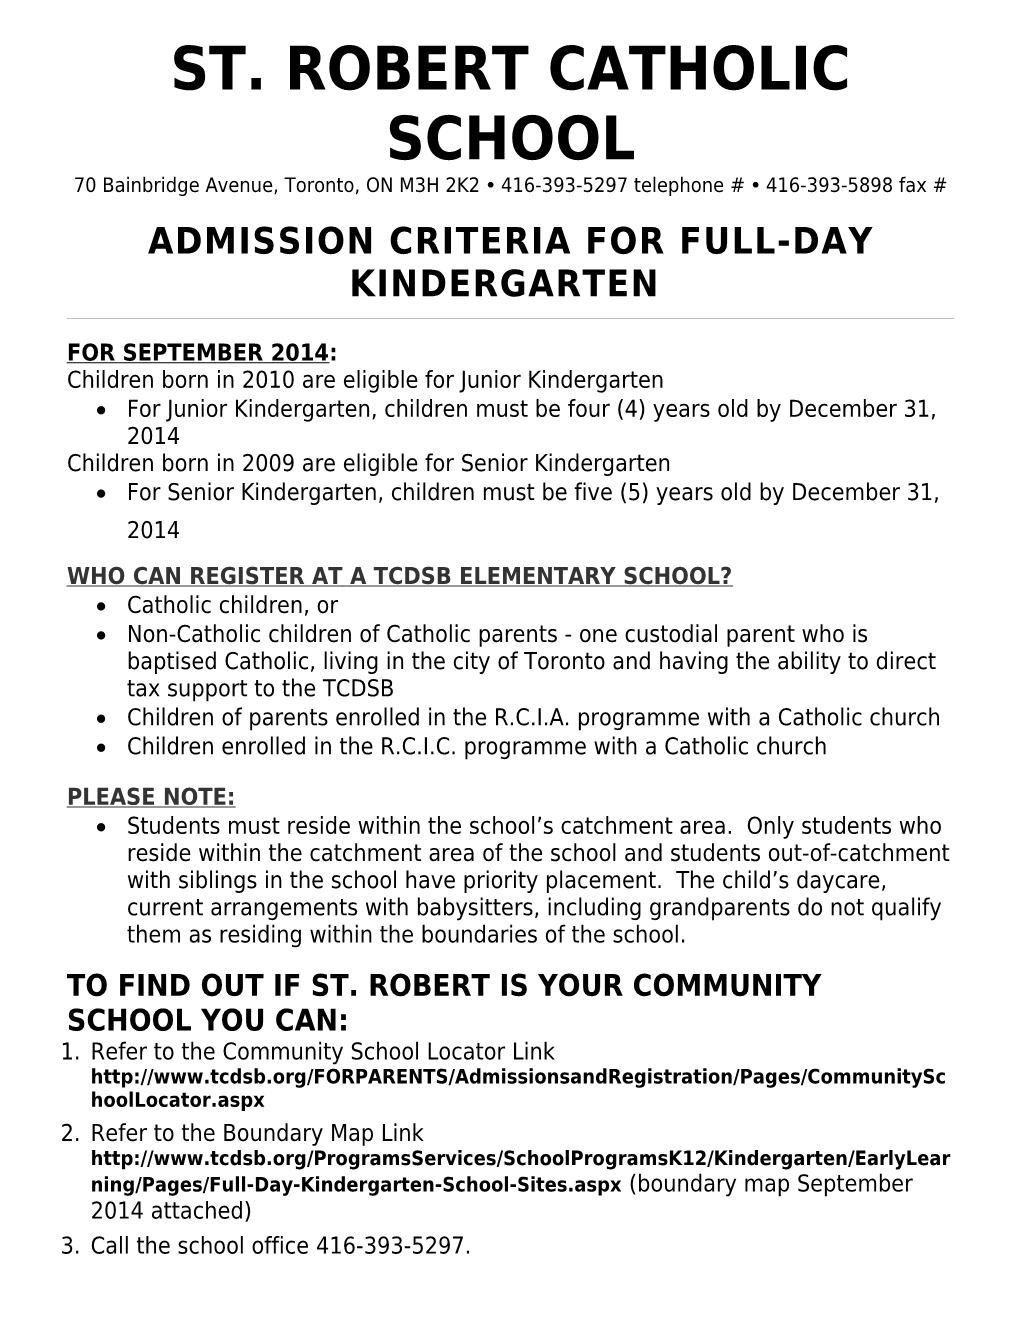 Admission Criteria for Full-Day Kindergarten